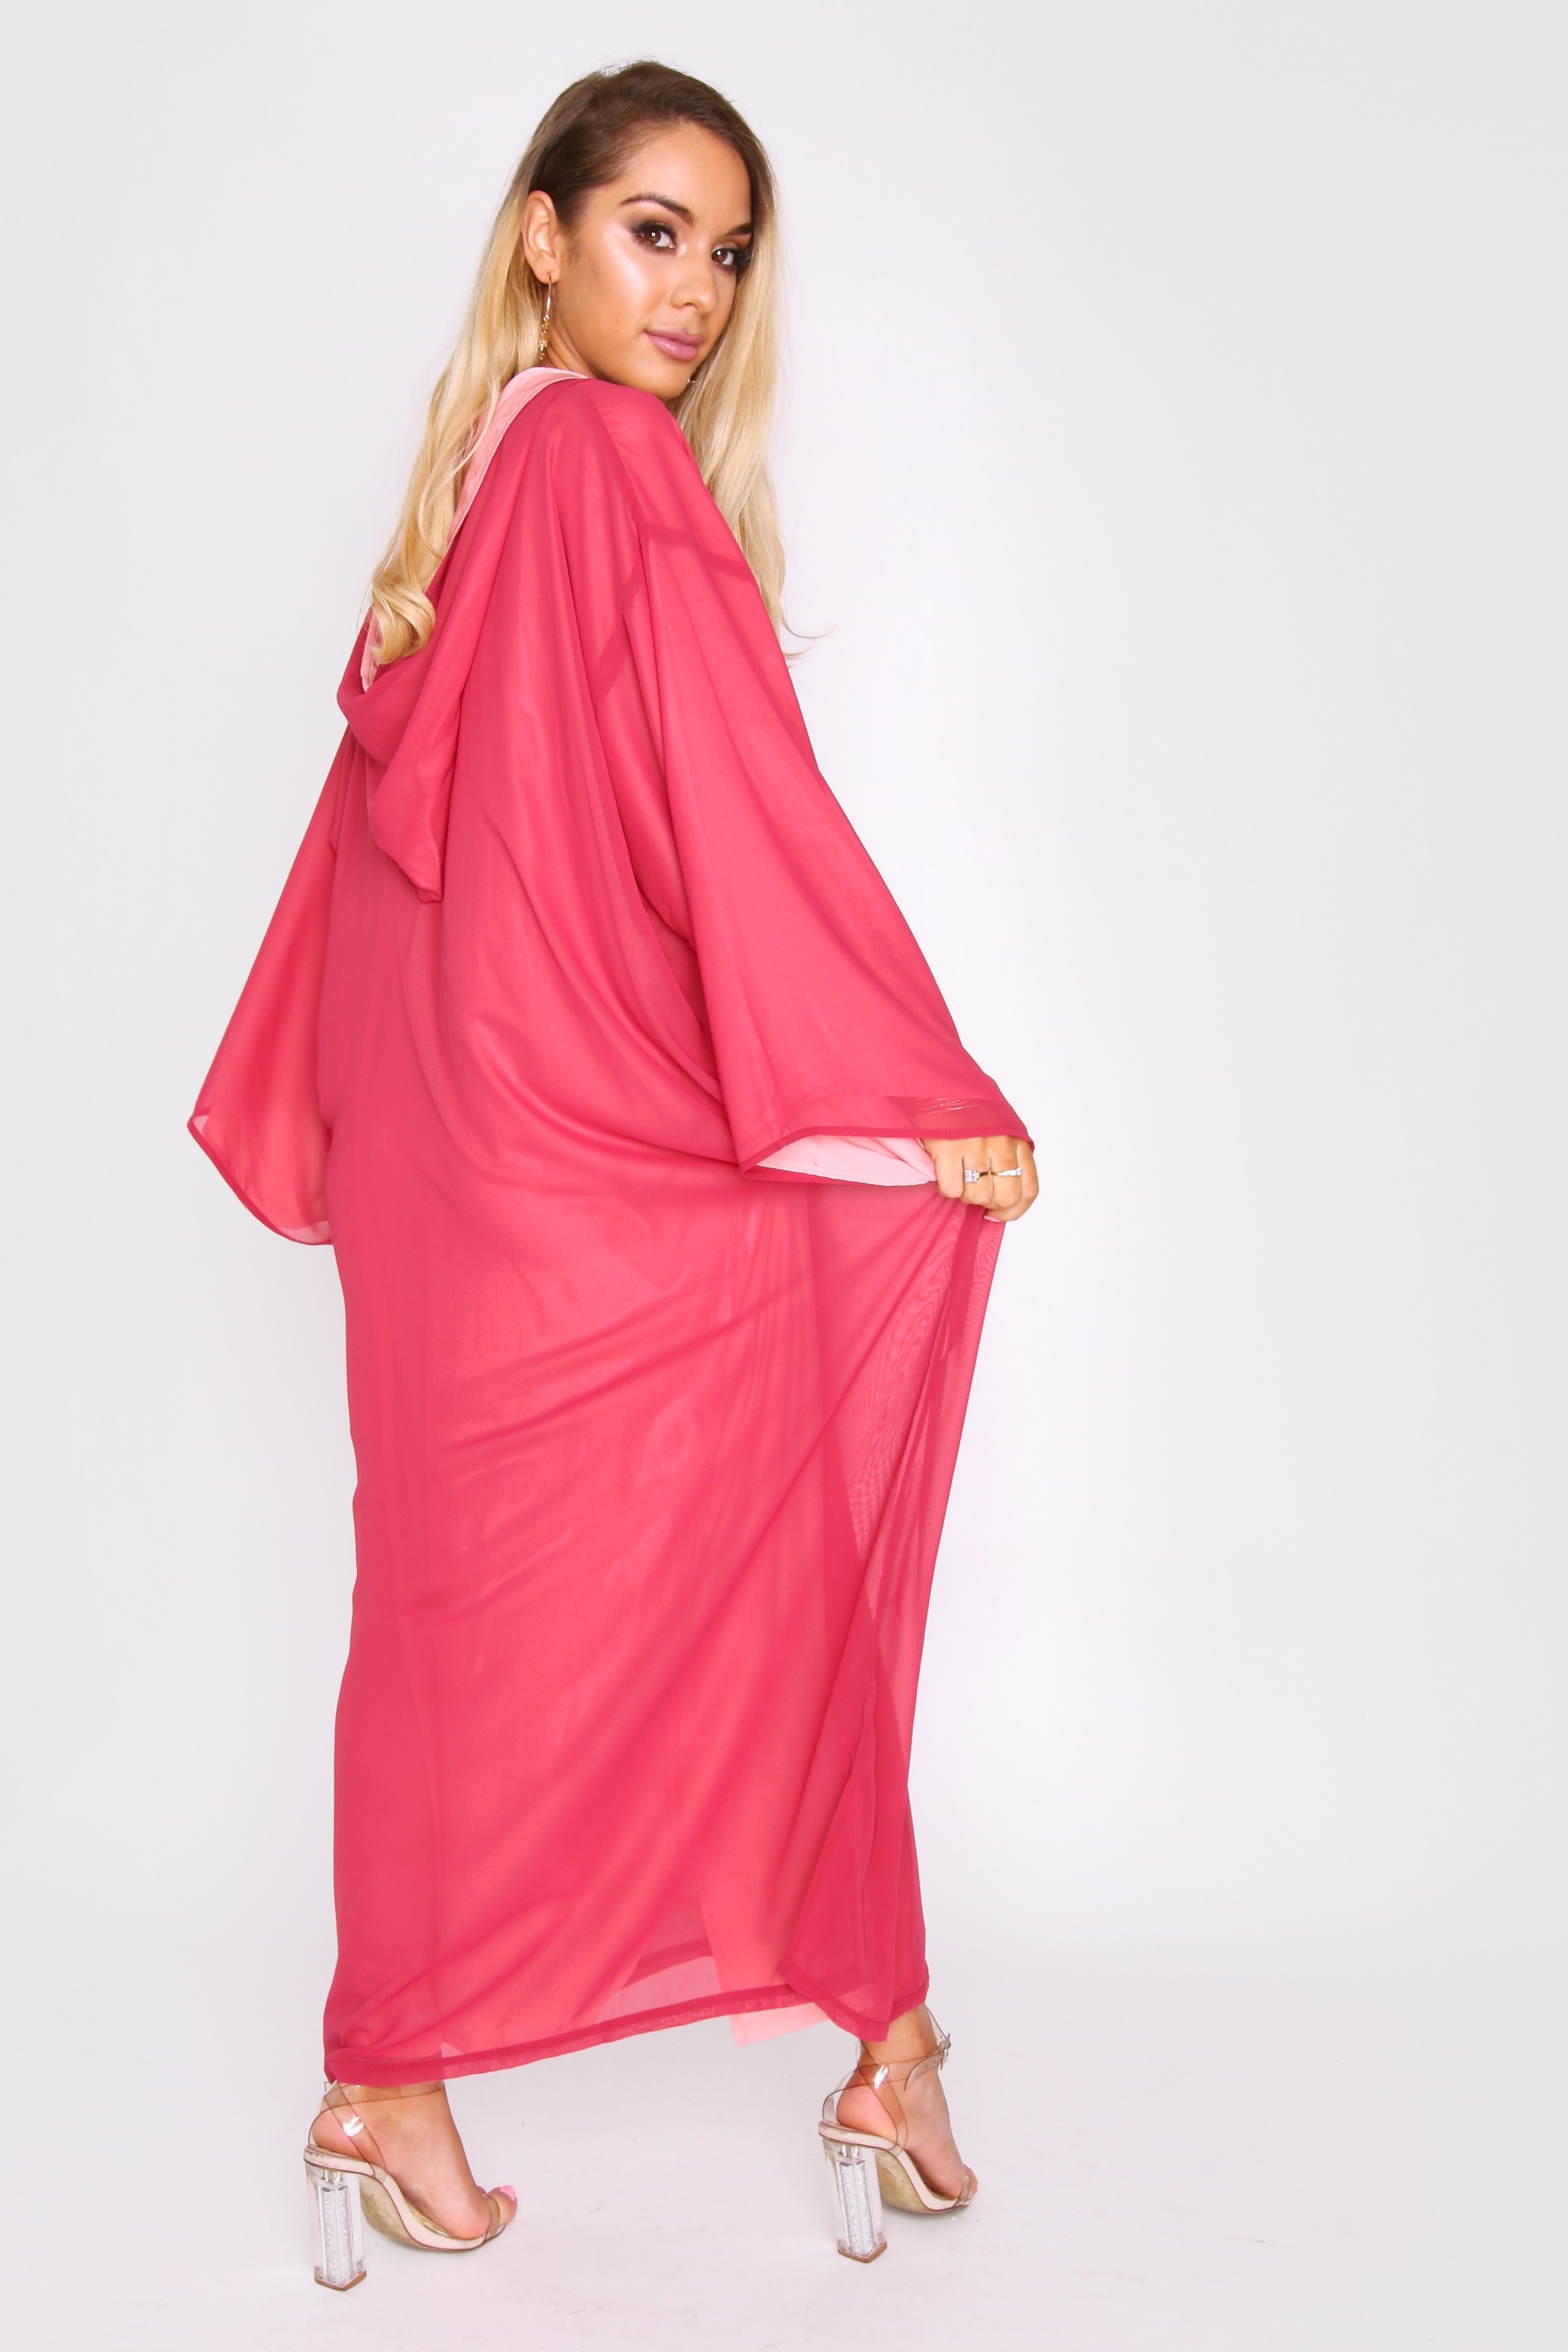 Djellaba Kmiss Basma Oversized Contrast Lining Hooded V-Neck Maxi Dress inåÊRaspberry